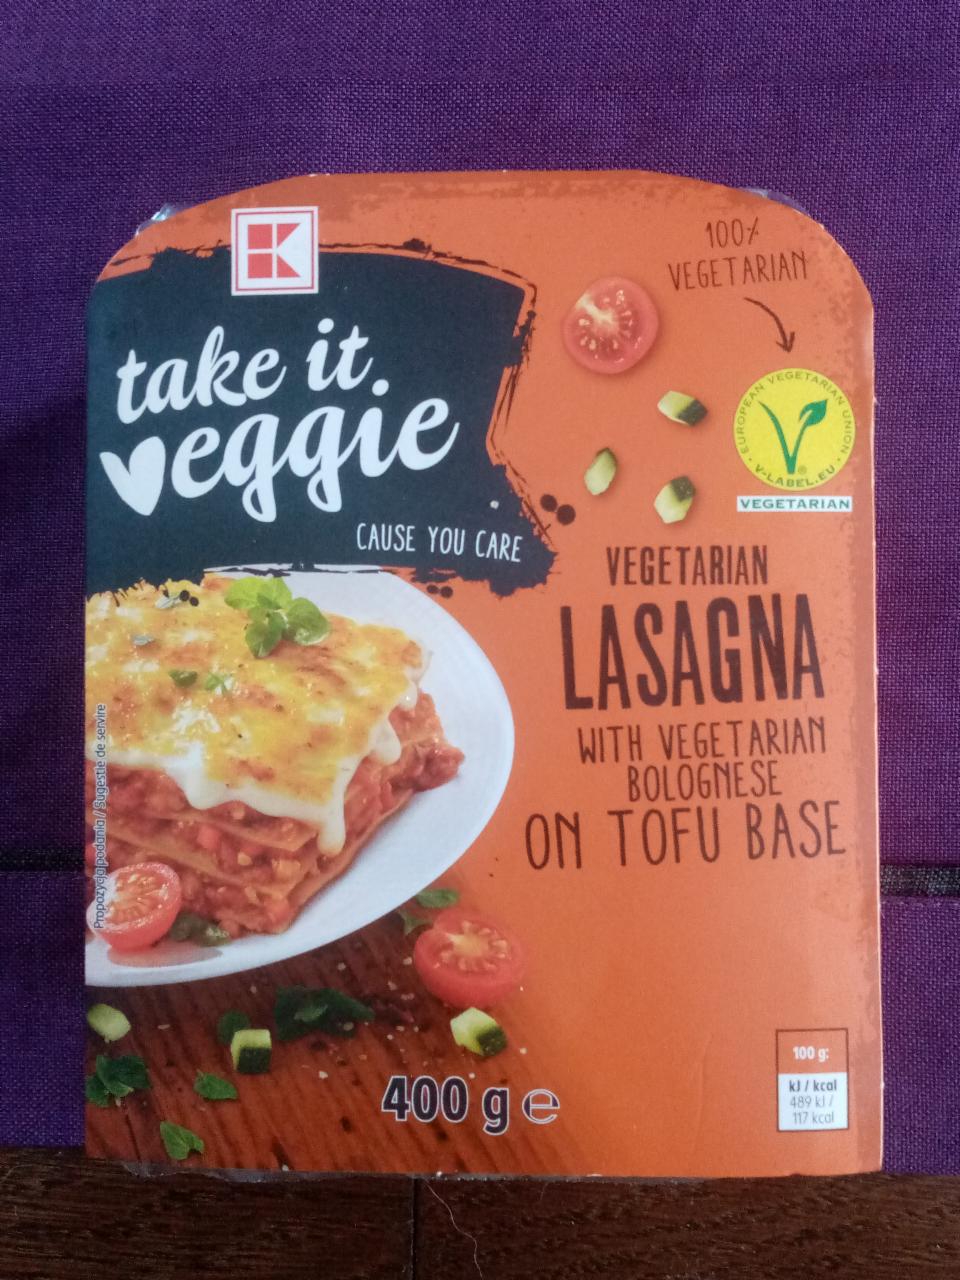 Zdjęcia - take it veggie vegetarian lasagna